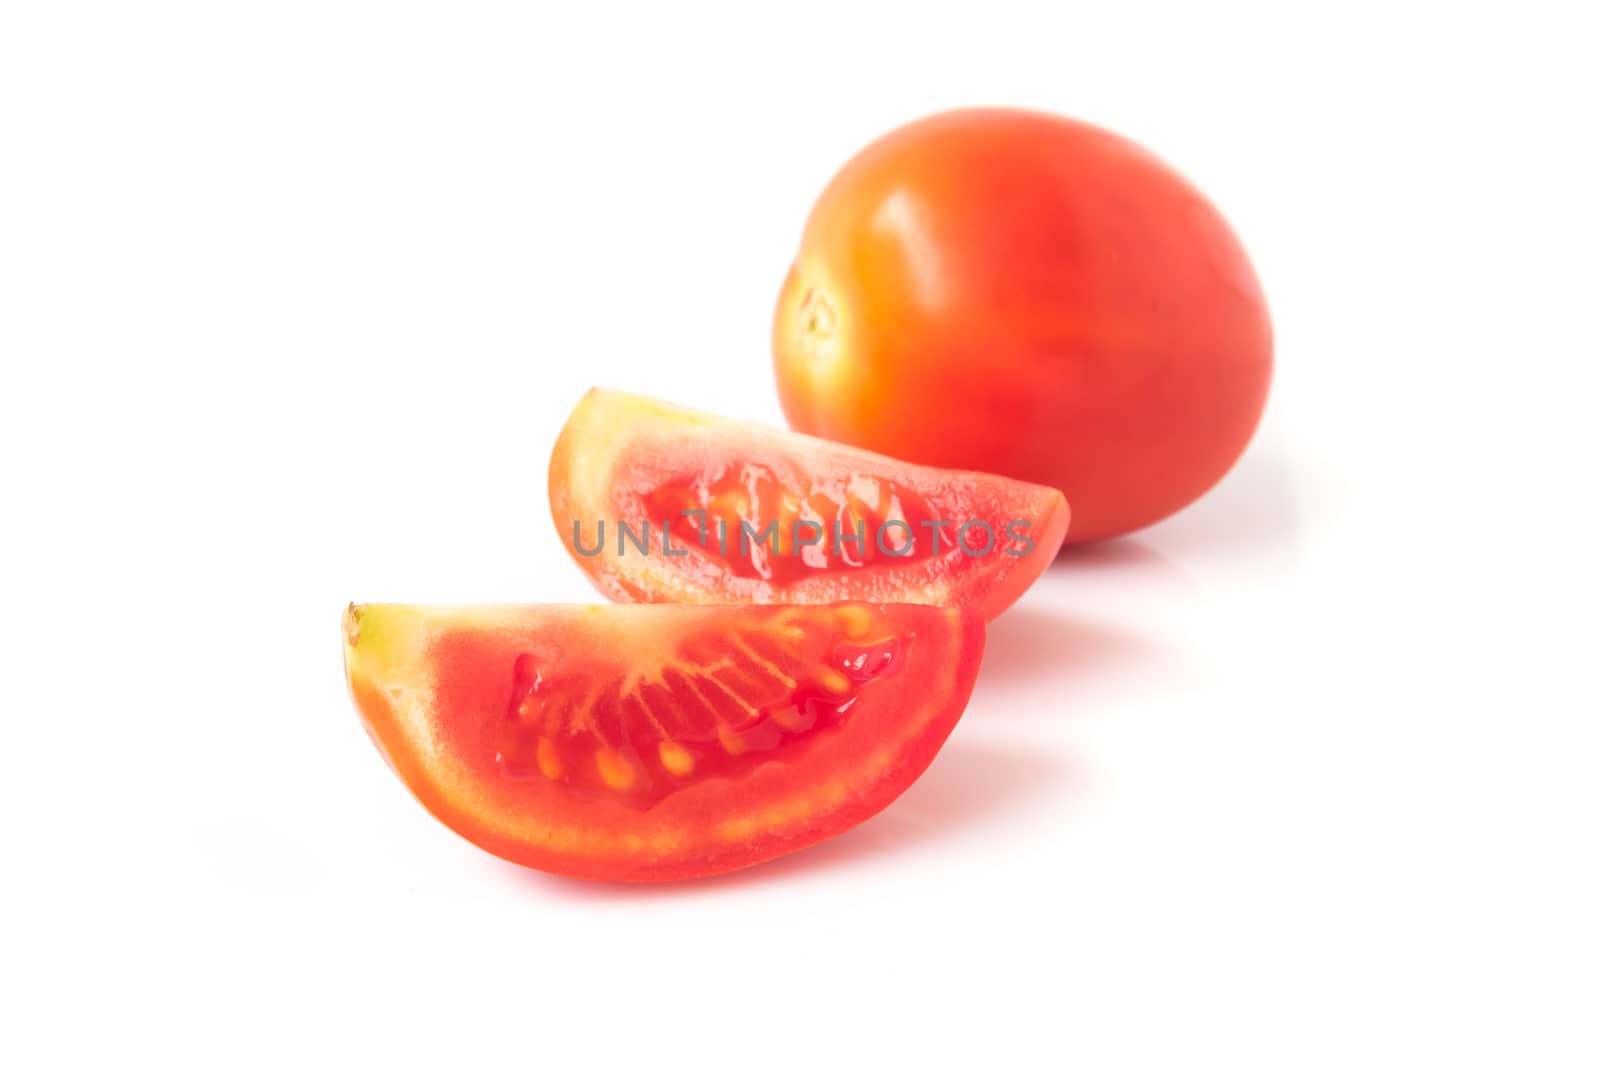 Fresh tomatoe slices on white background, selective focus by pt.pongsak@gmail.com